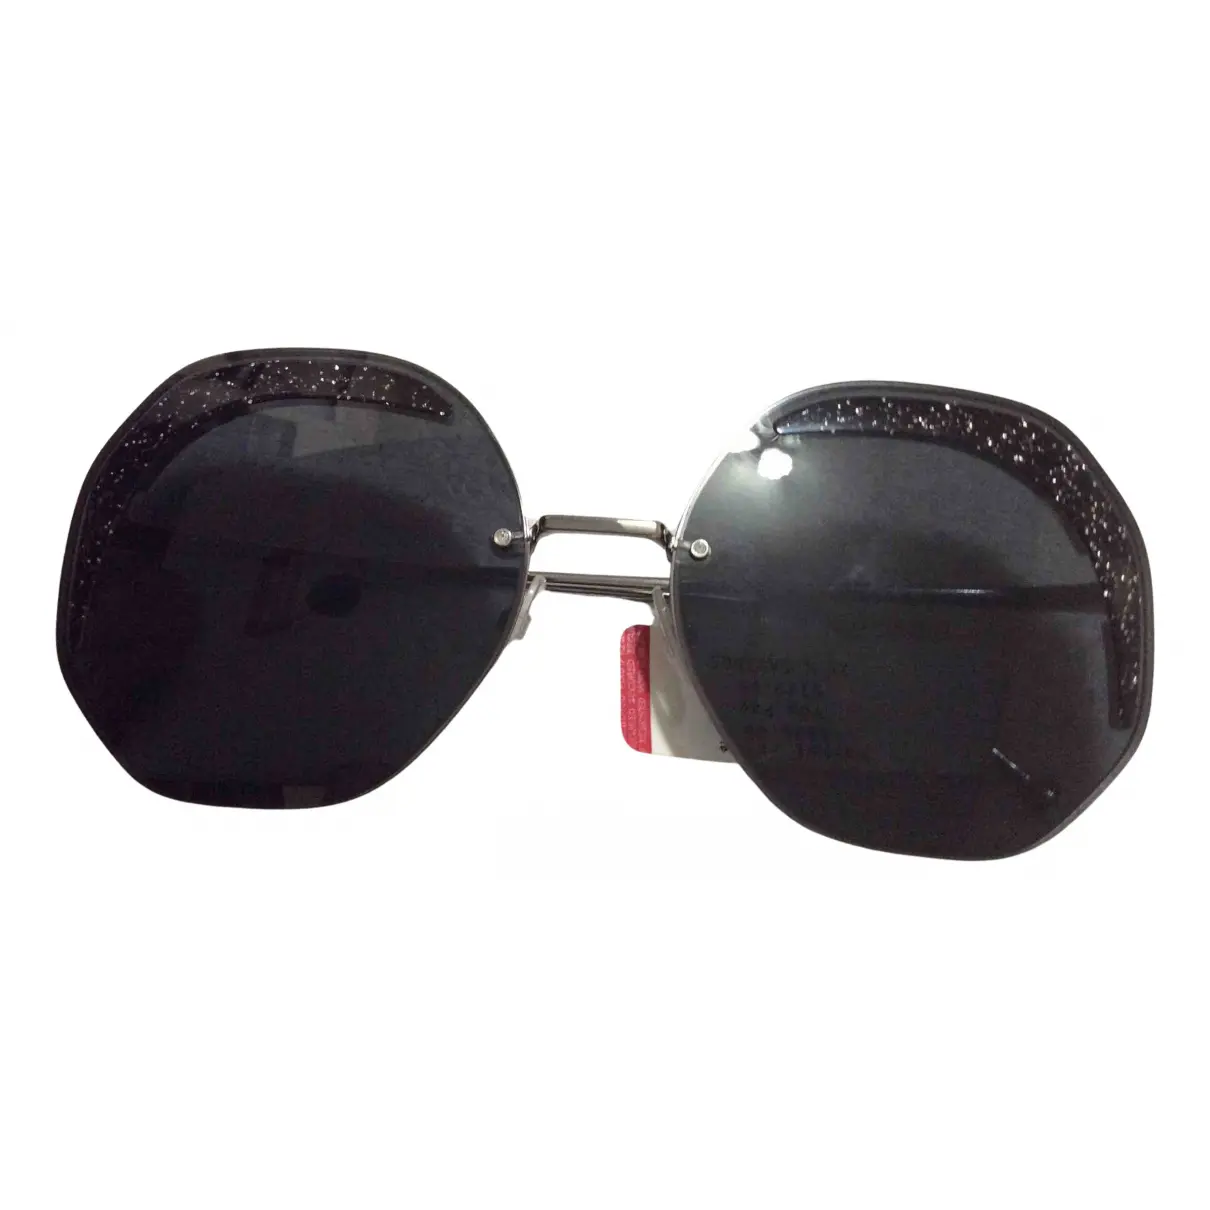 Oversized sunglasses Fendi